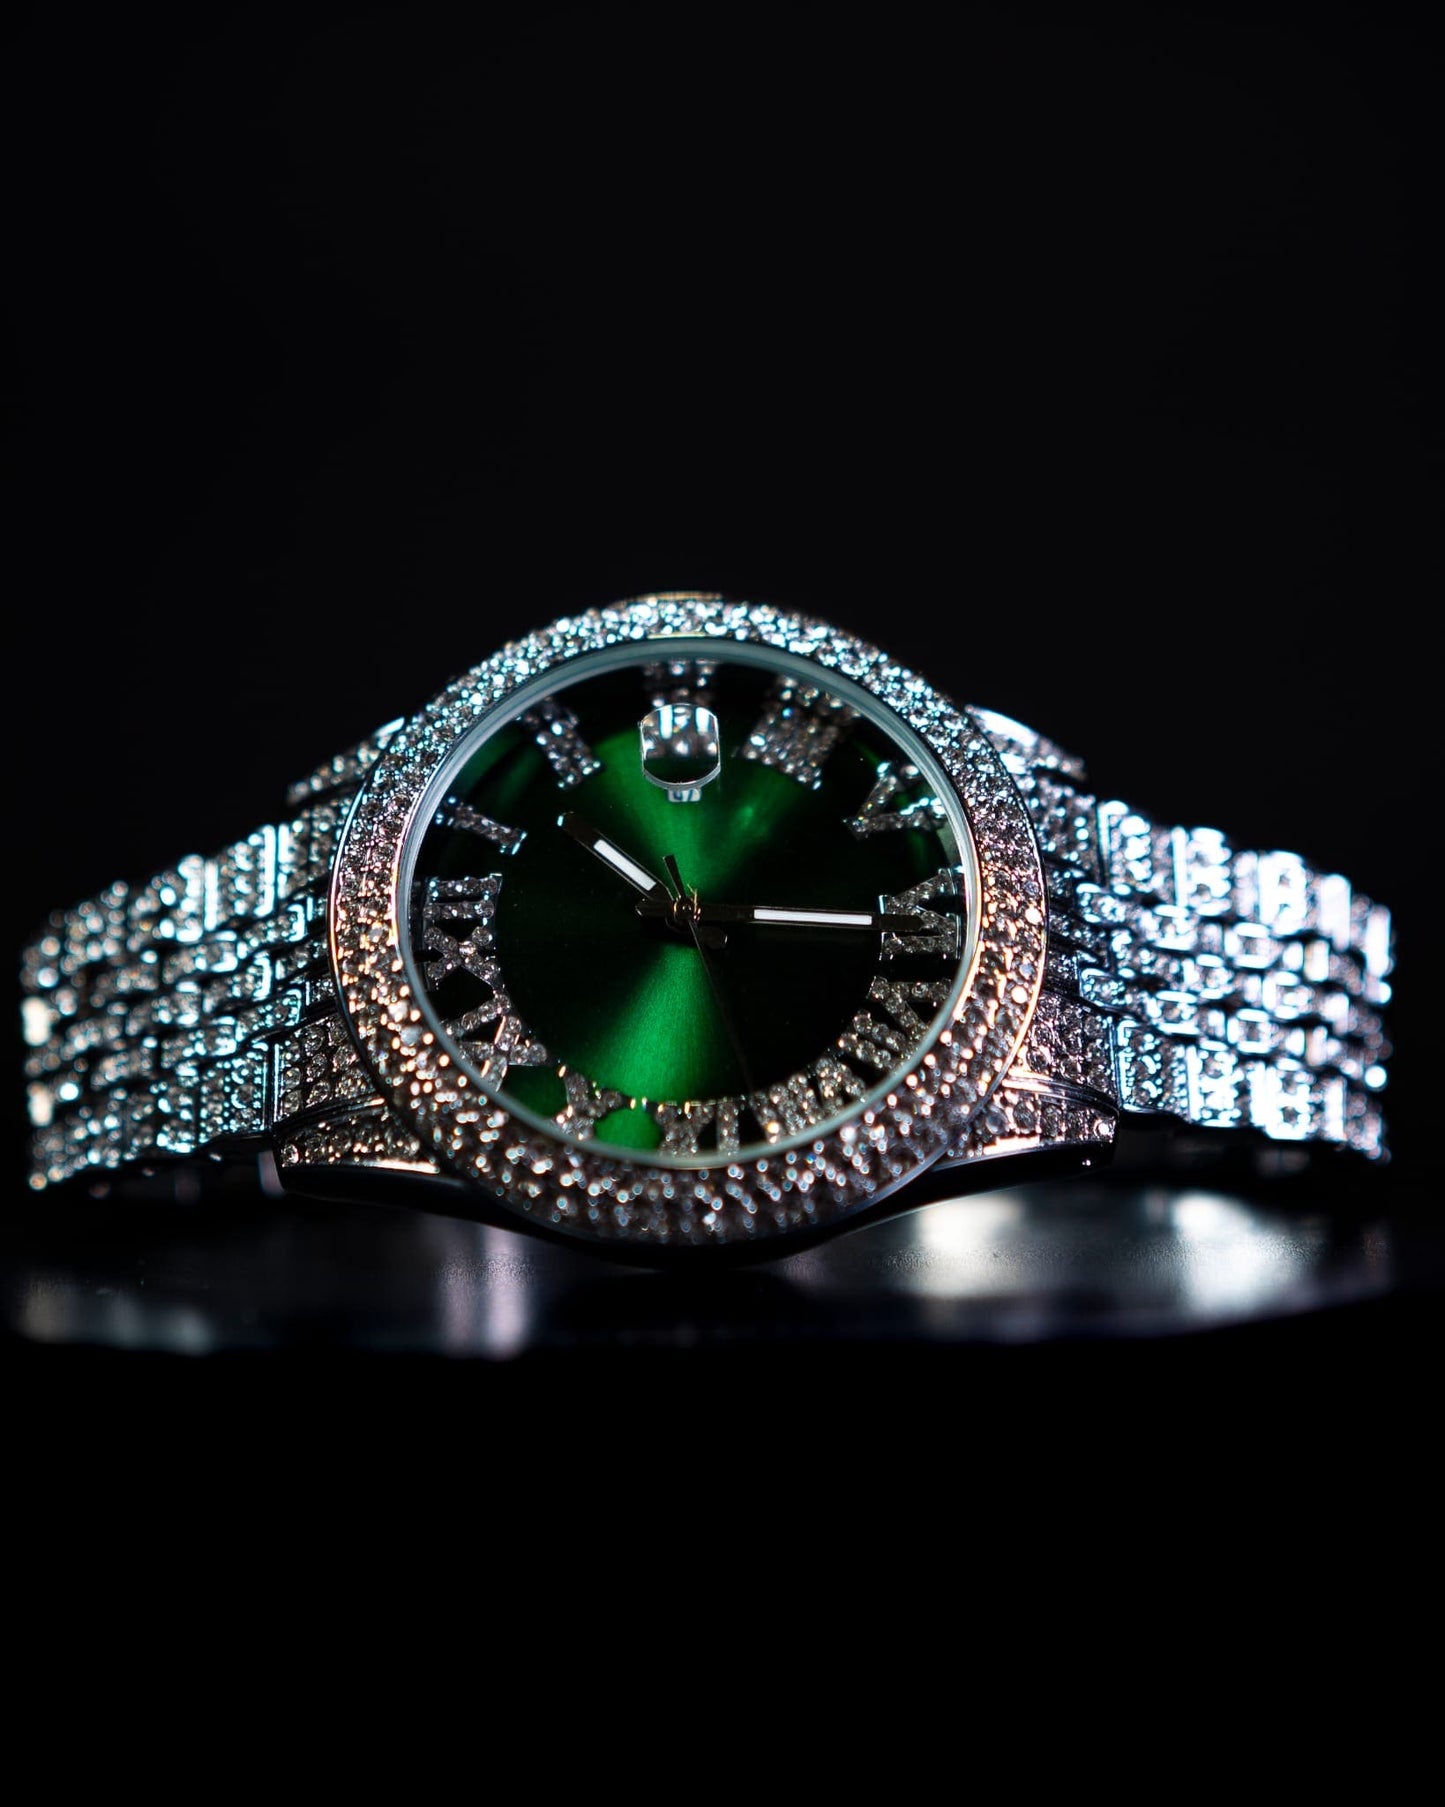 Ice Royal Watch